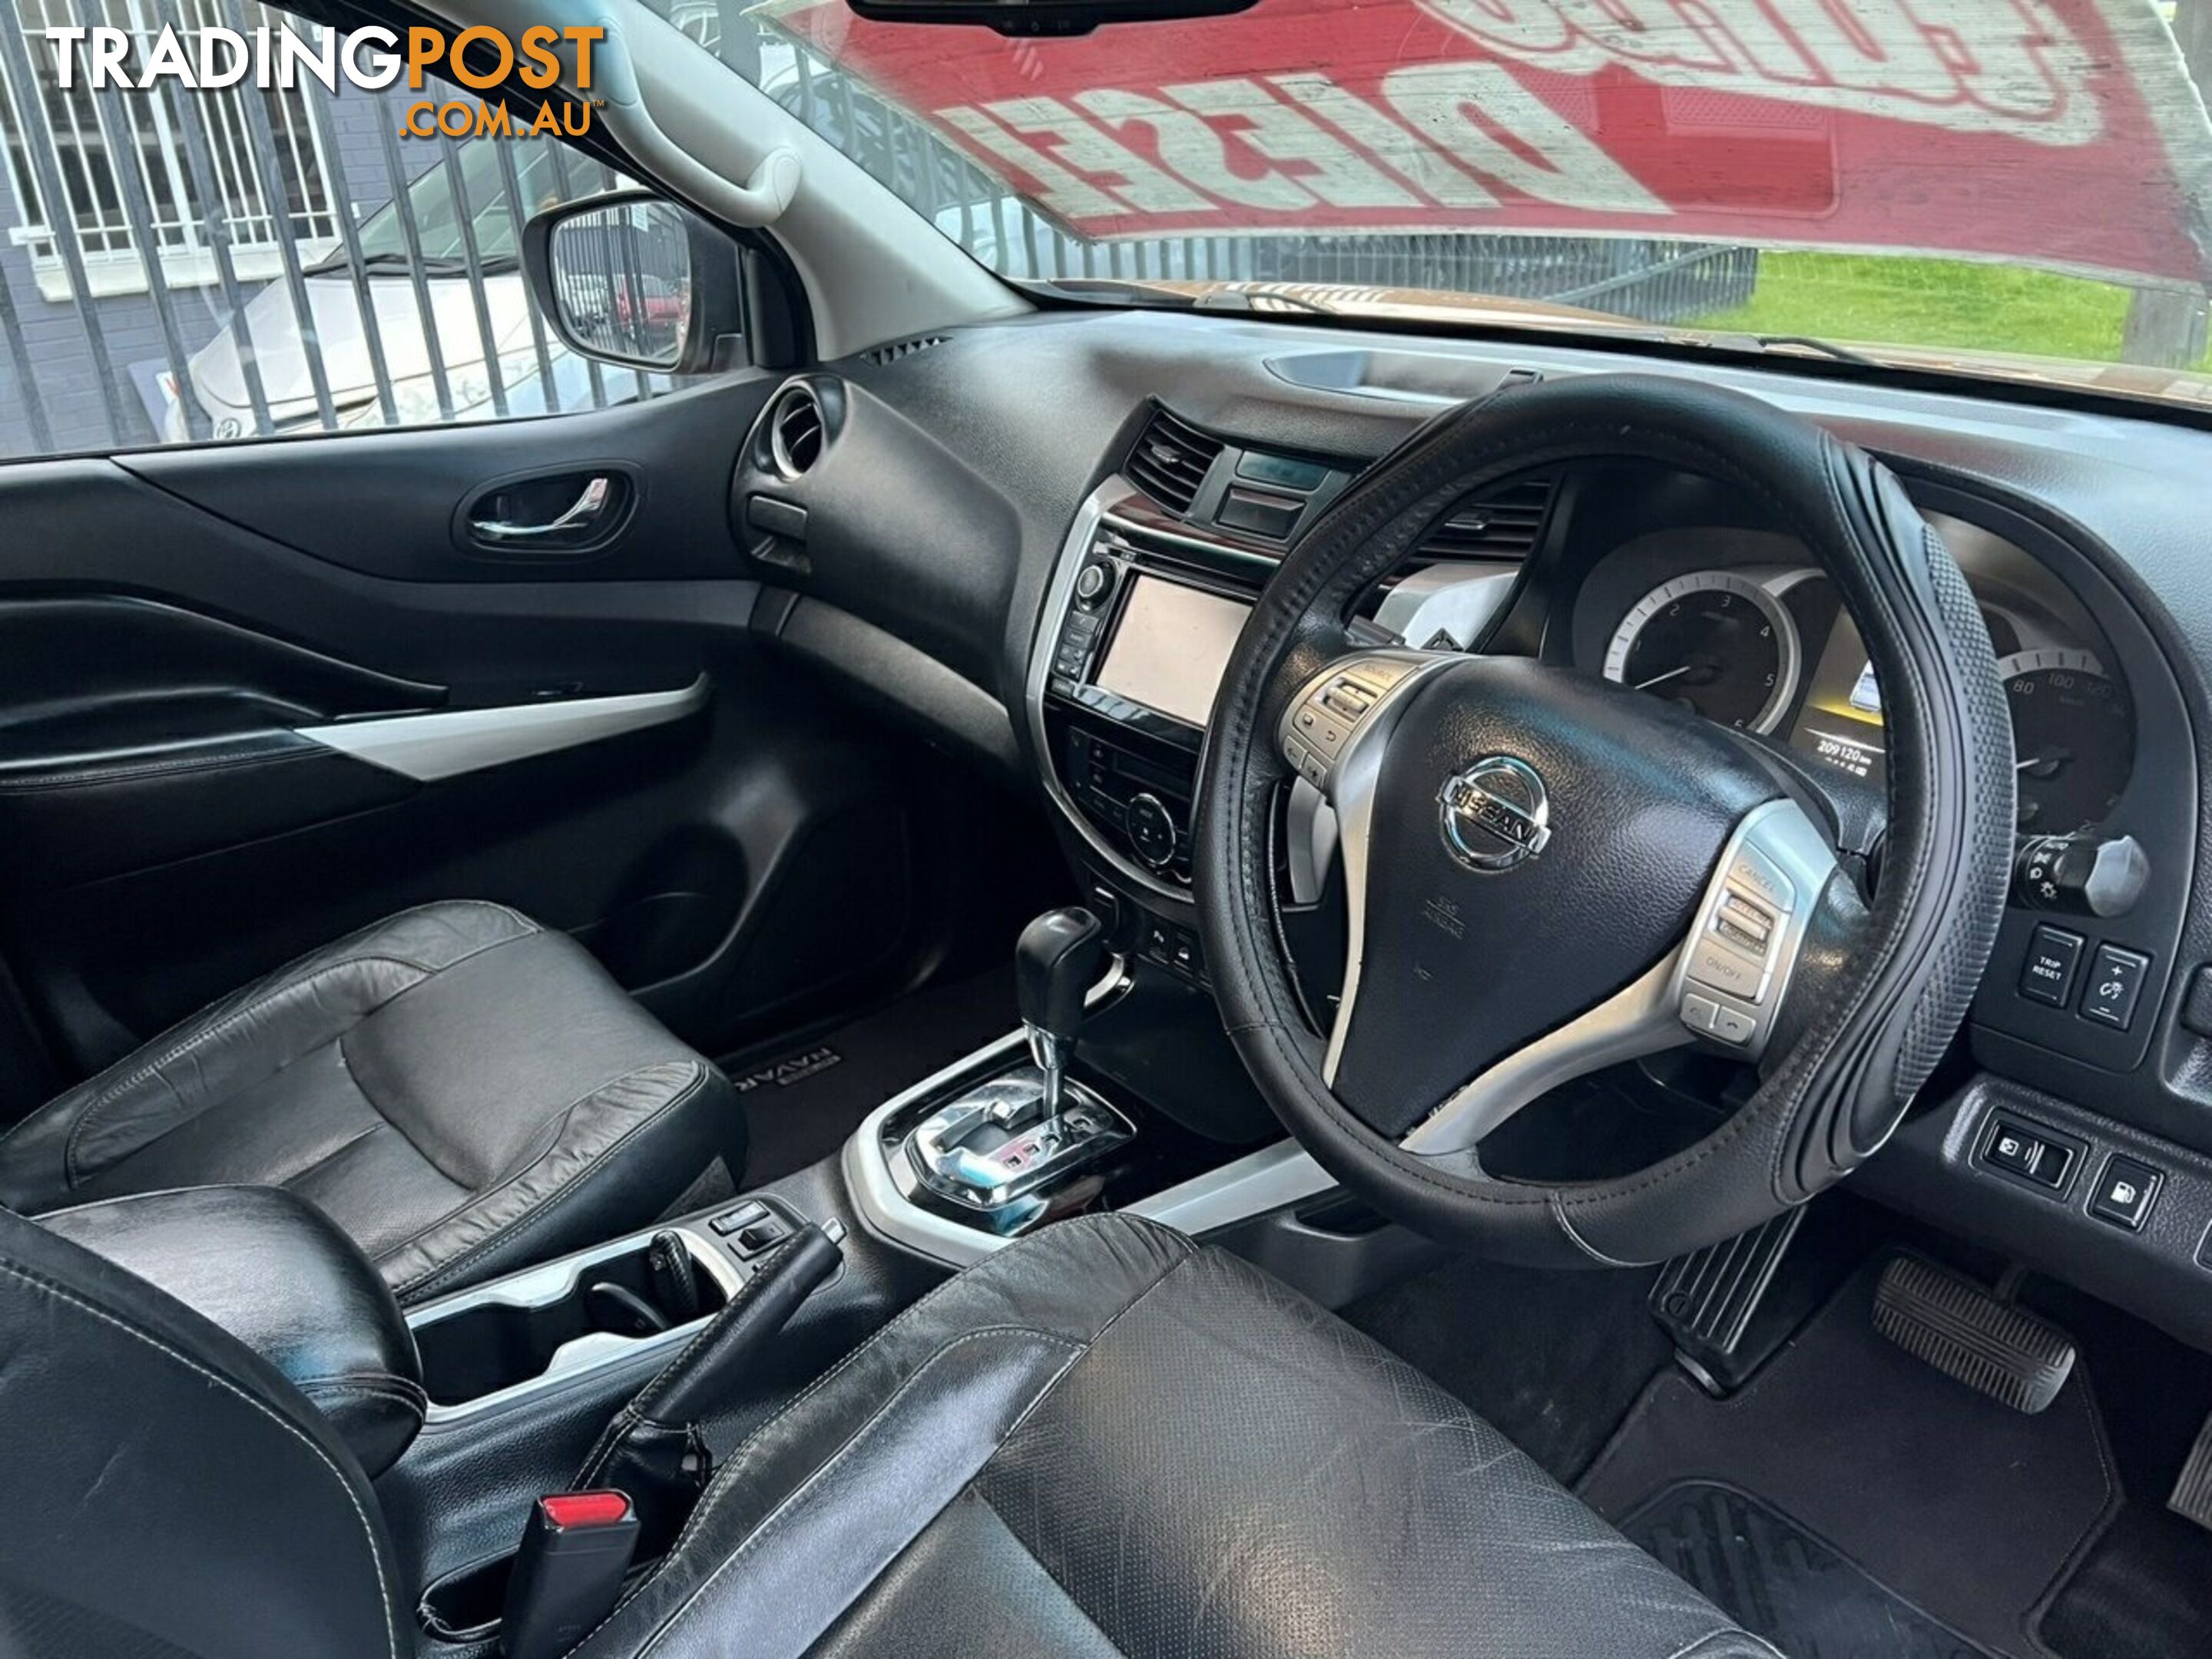 2015 Nissan Navara ST-X (4x4) NP300 D23 Dual Cab Utility